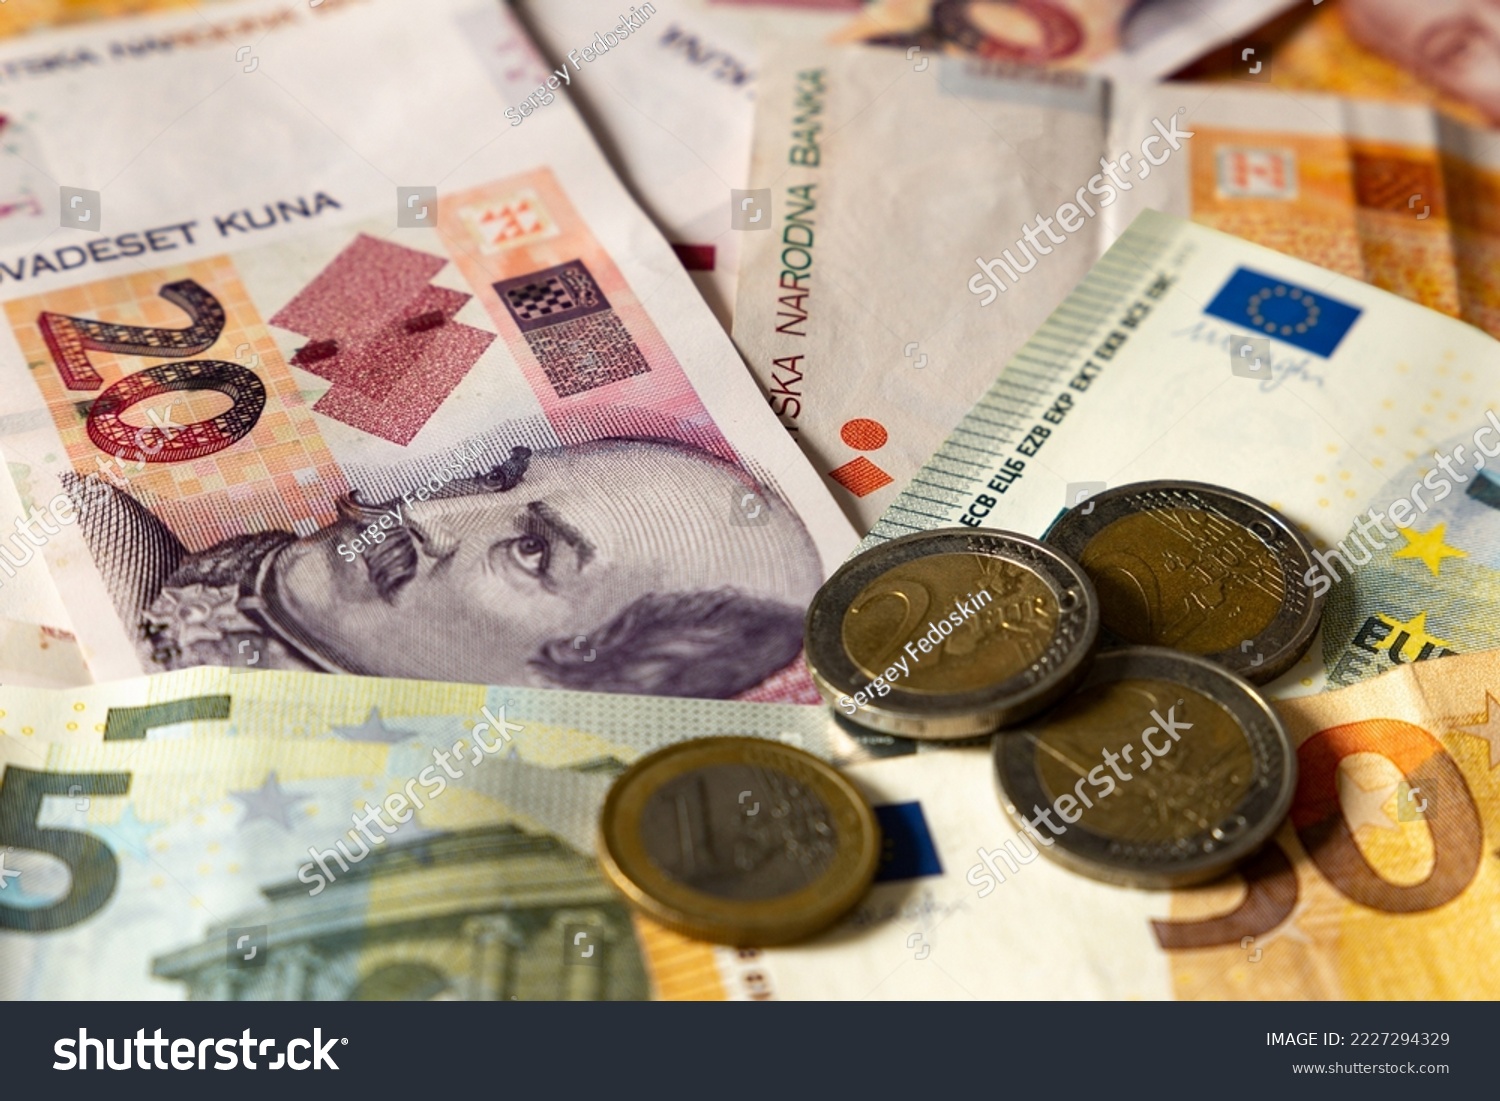 Croatia joins the eurozone.
Croatian banknotes and European banknotes (Kuna and Euro). #2227294329